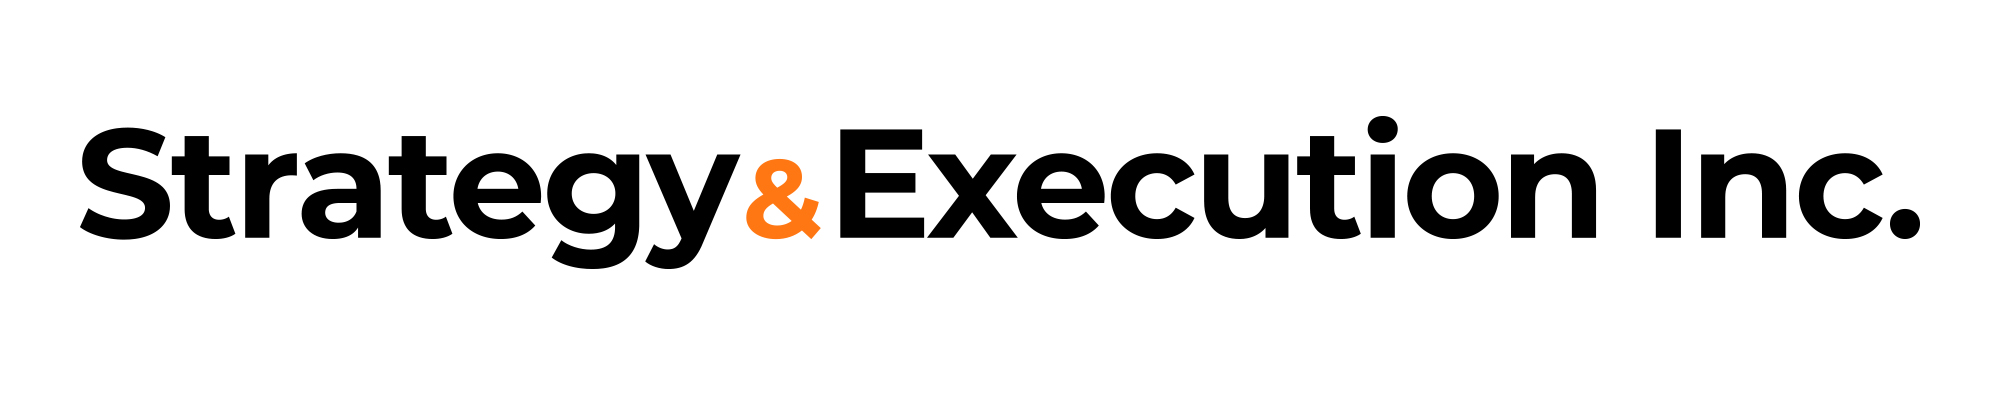 Strategy & Execution Inc. Logo